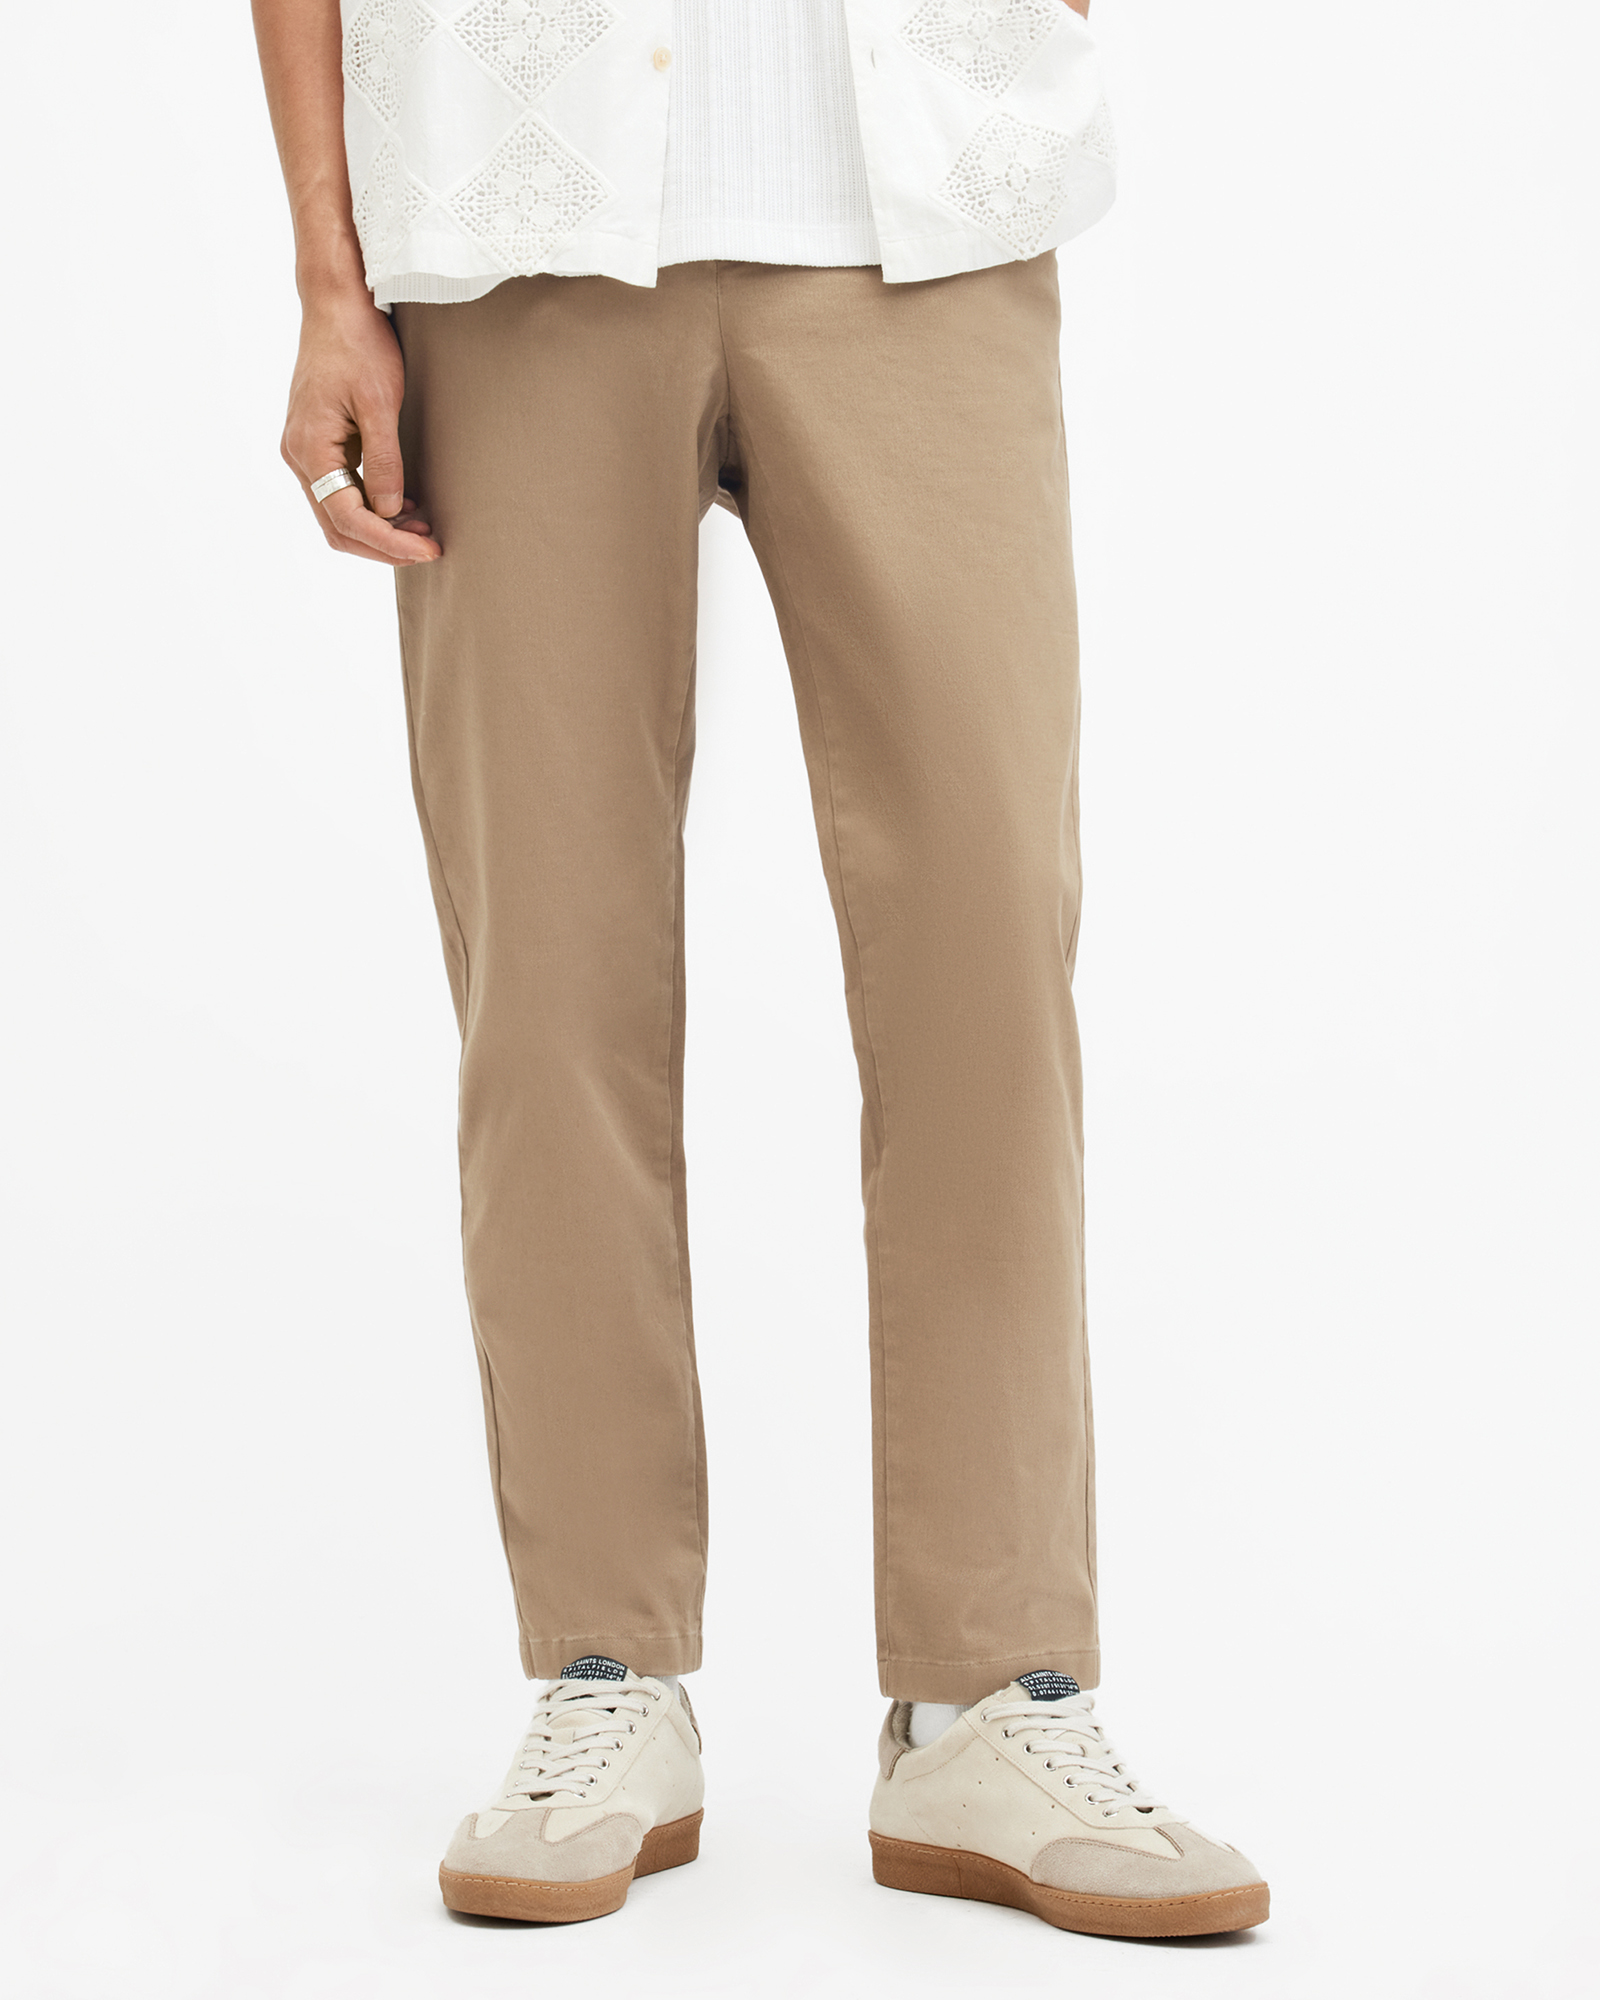 AllSaints Walde Skinny Fit Chino Trousers,, MOORLAND BROWN